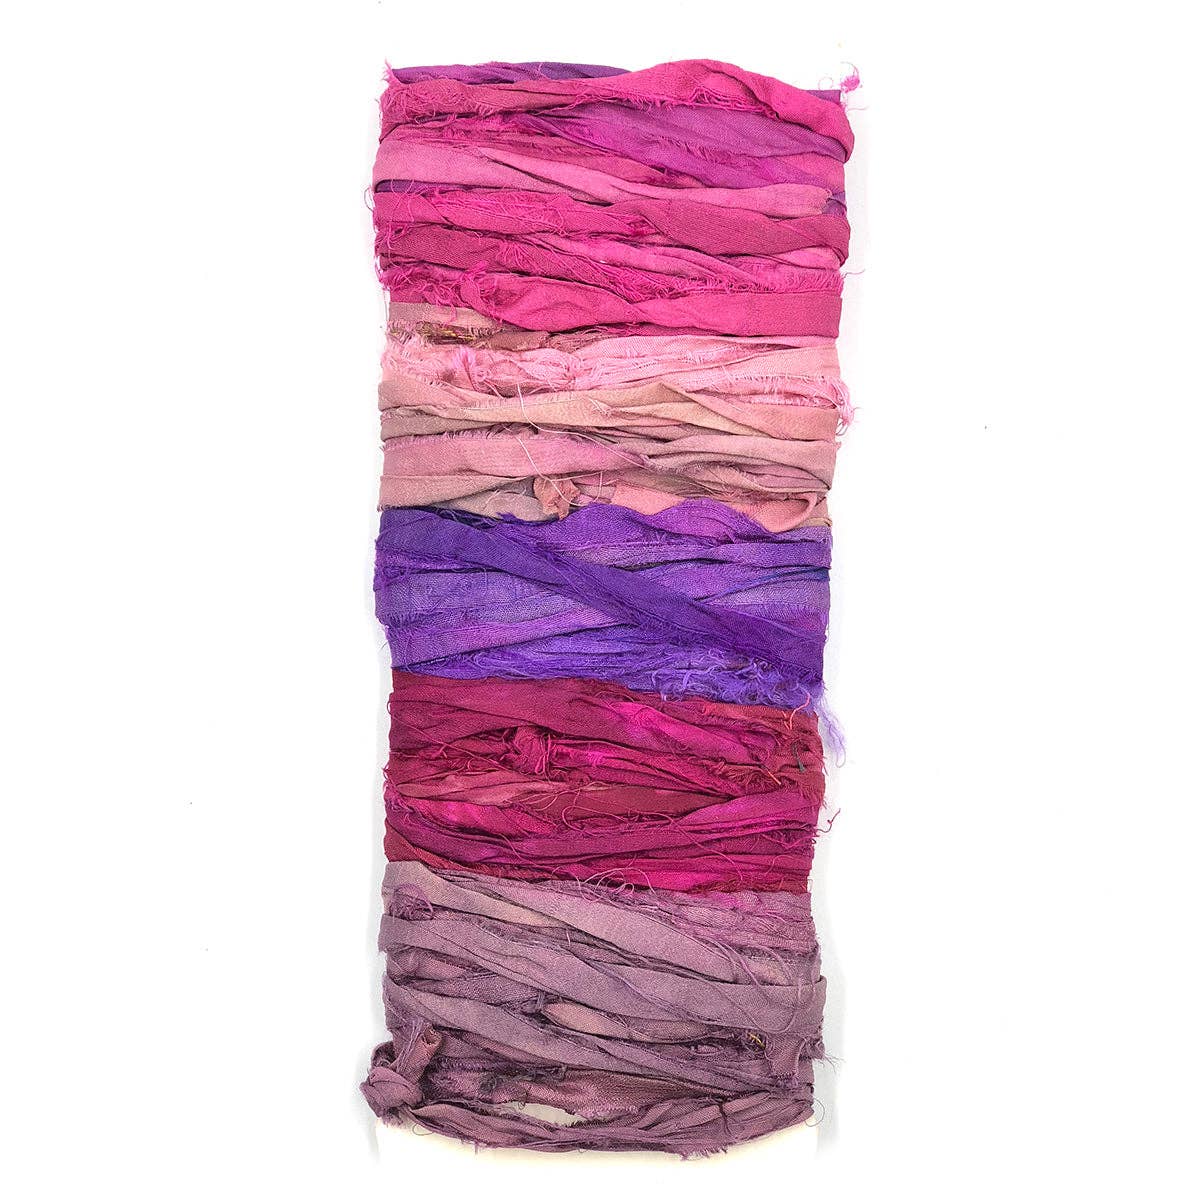 Yarn & Ribbon 5 Color Sample Cards: Harvest